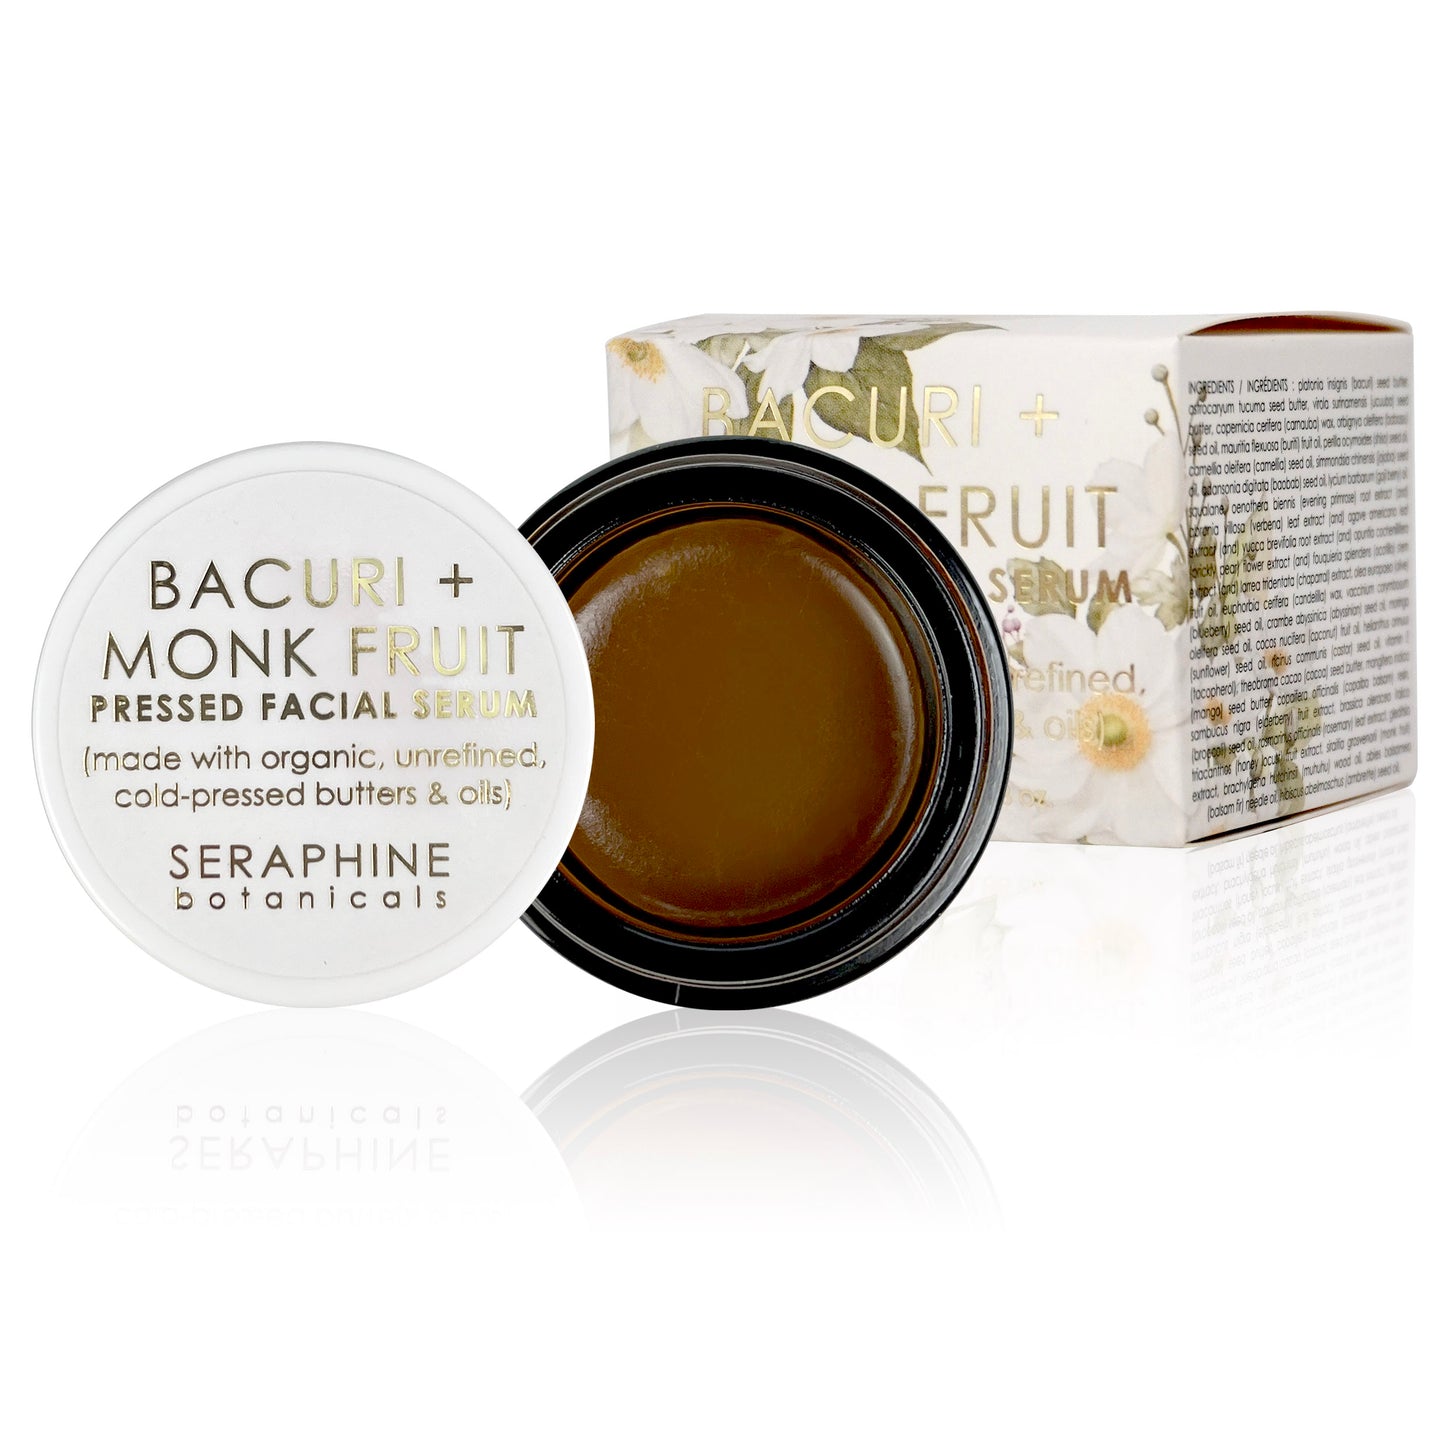 Bacuri + Monk Fruit - Pressed Facial Serum